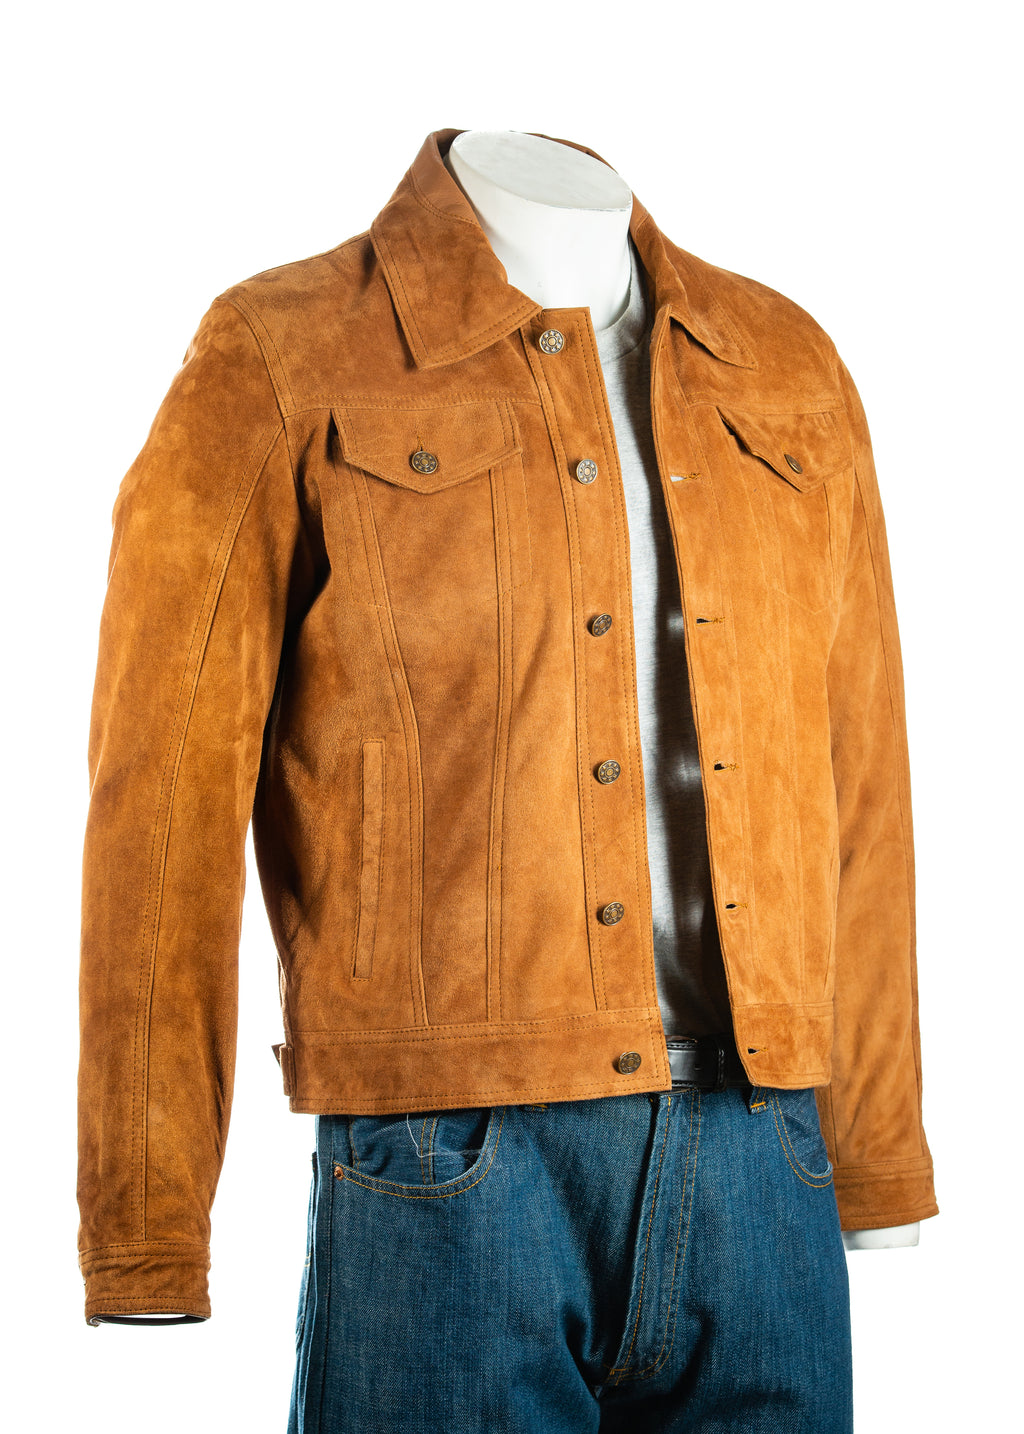 Men's Tan Denim Shirt Style Suede Jacket: Antonio